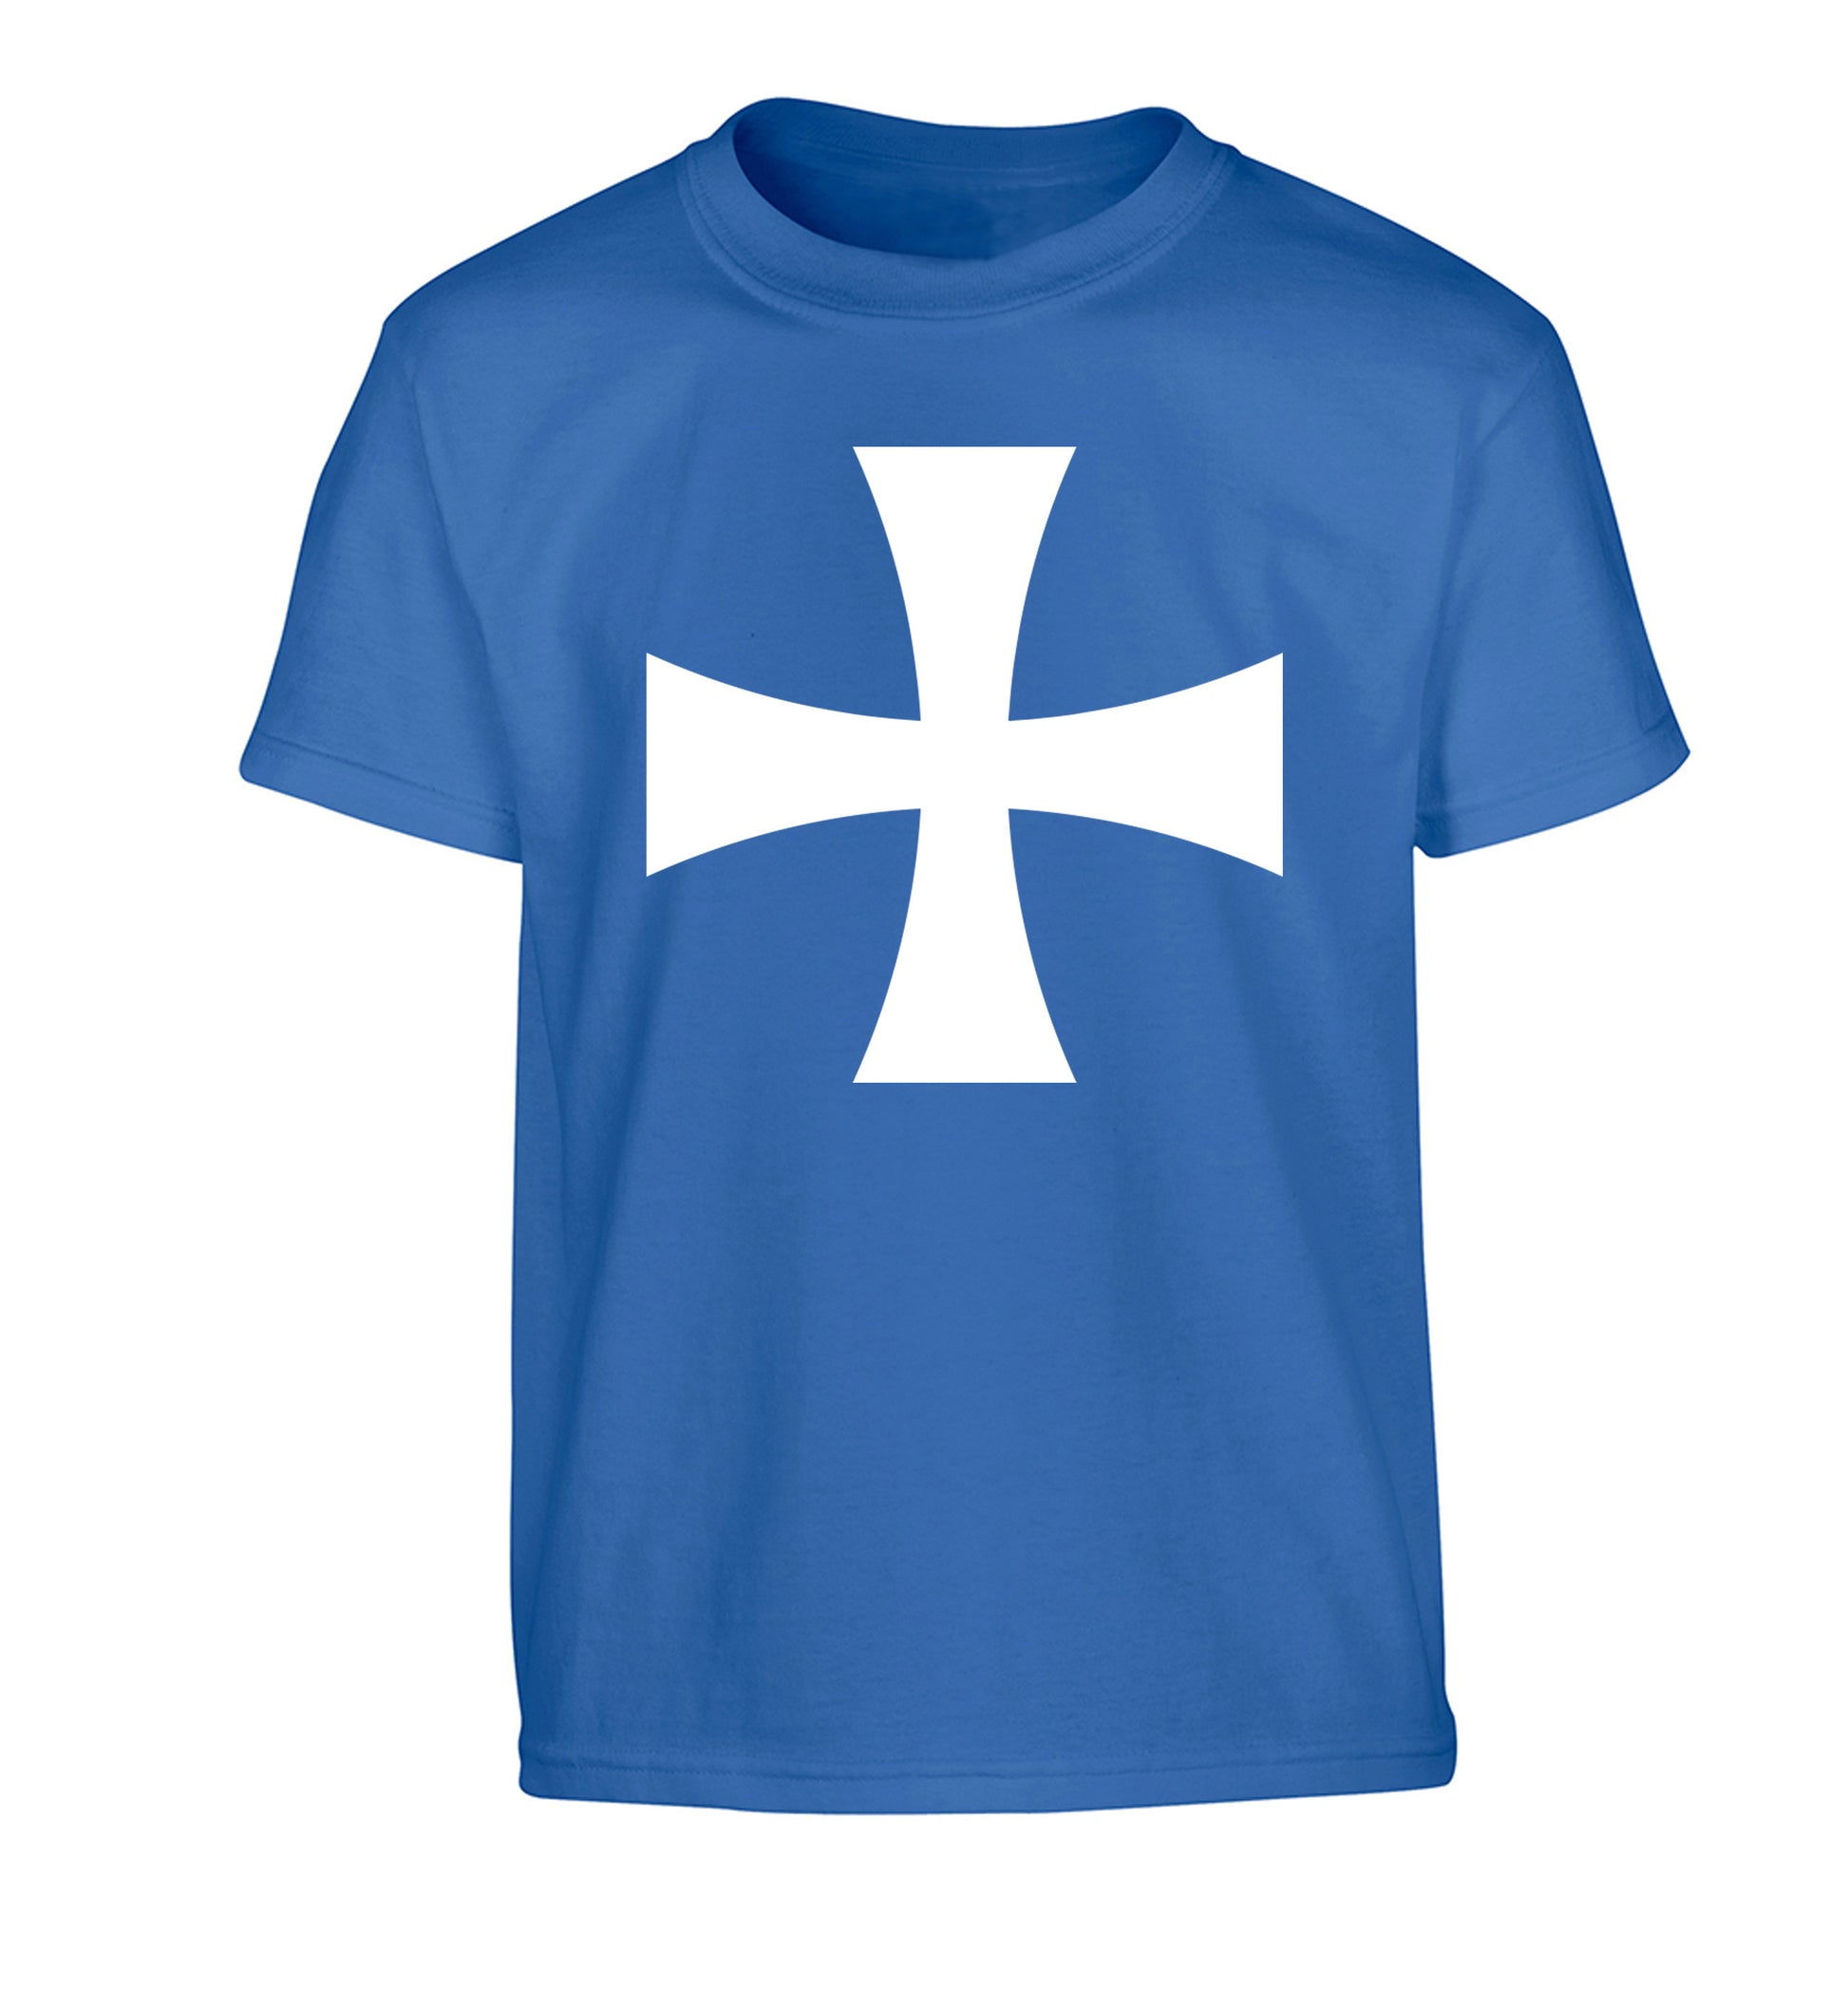 Knights Templar cross Children's blue Tshirt 12-14 Years